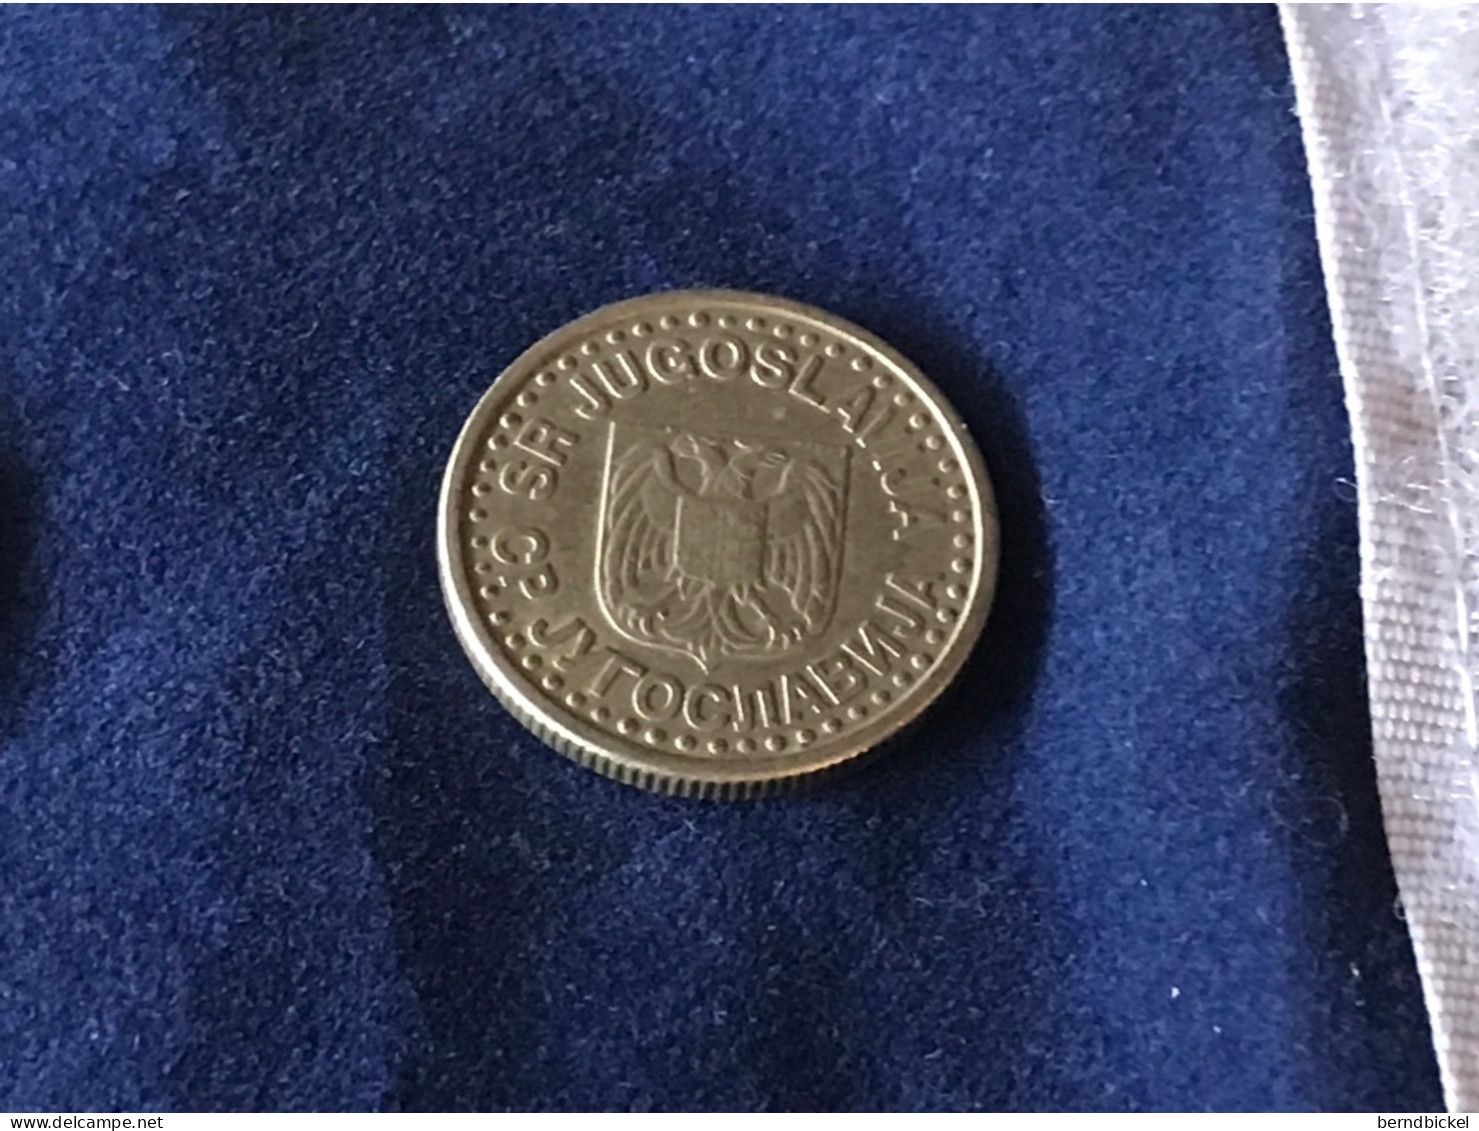 Münze Münzen Umlaufmünze Jugoslawien 1 Dinar 1996 - Kenya